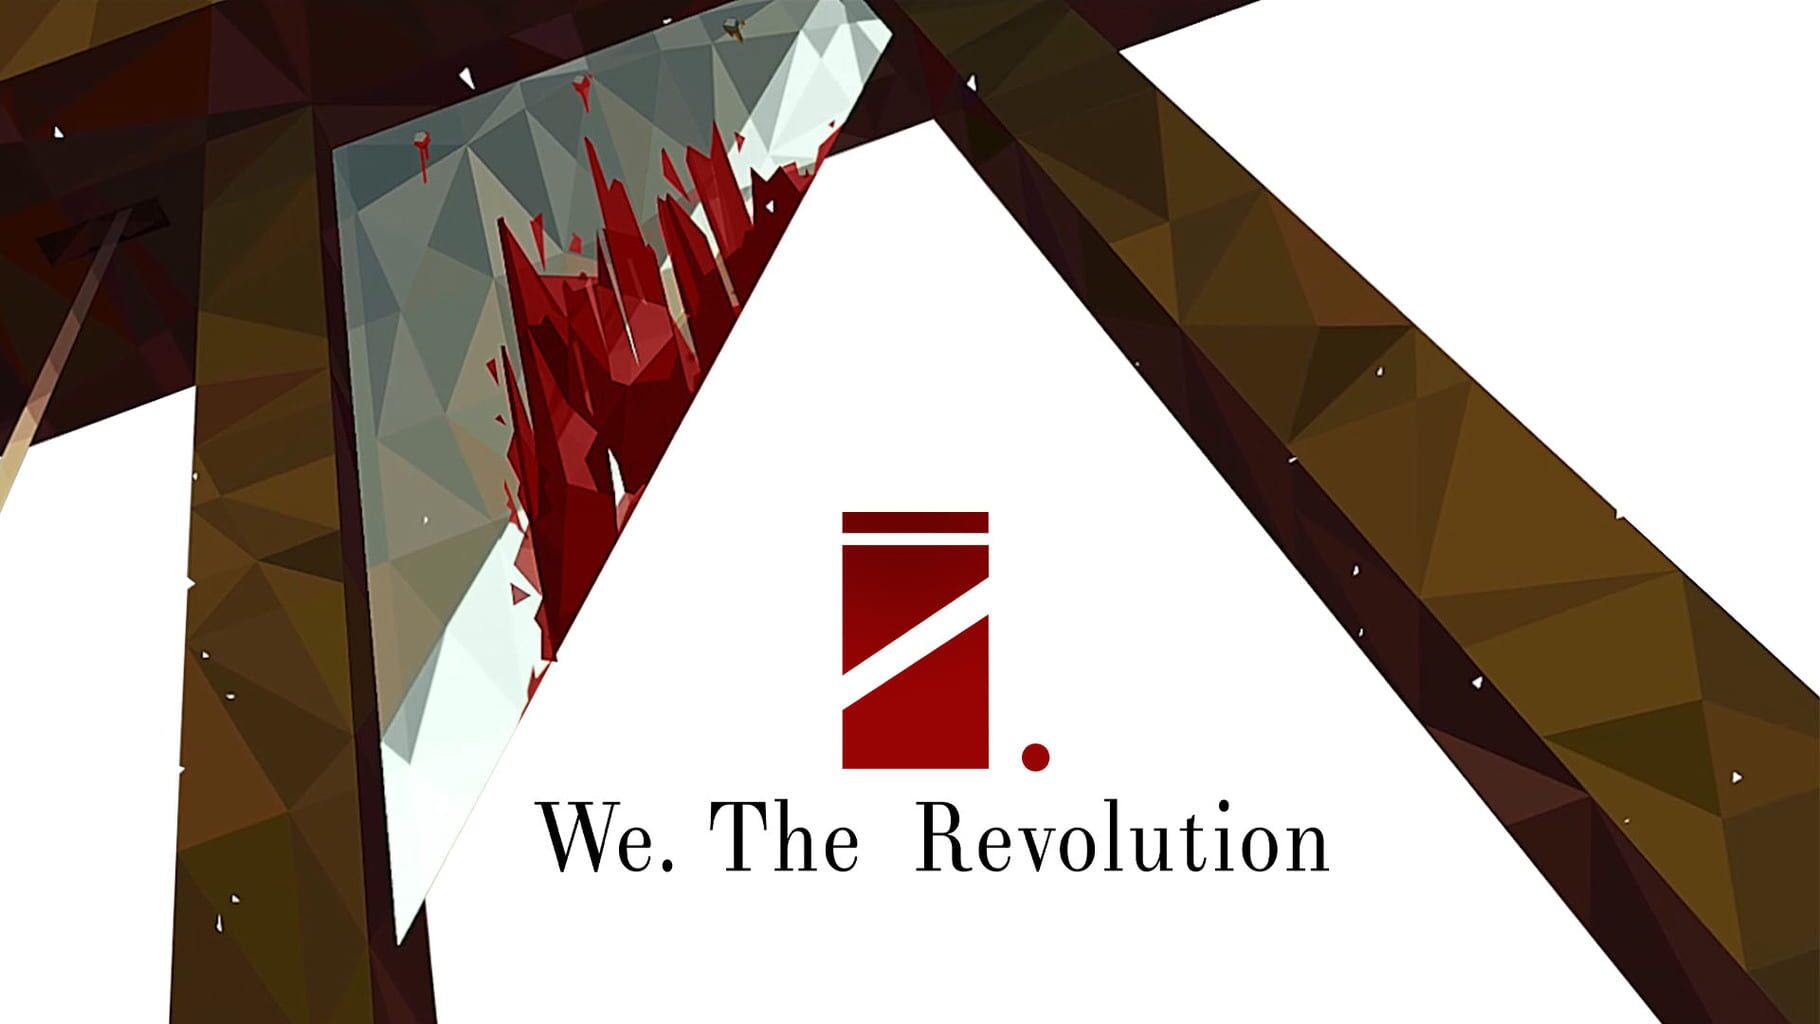 We. The Revolution artwork